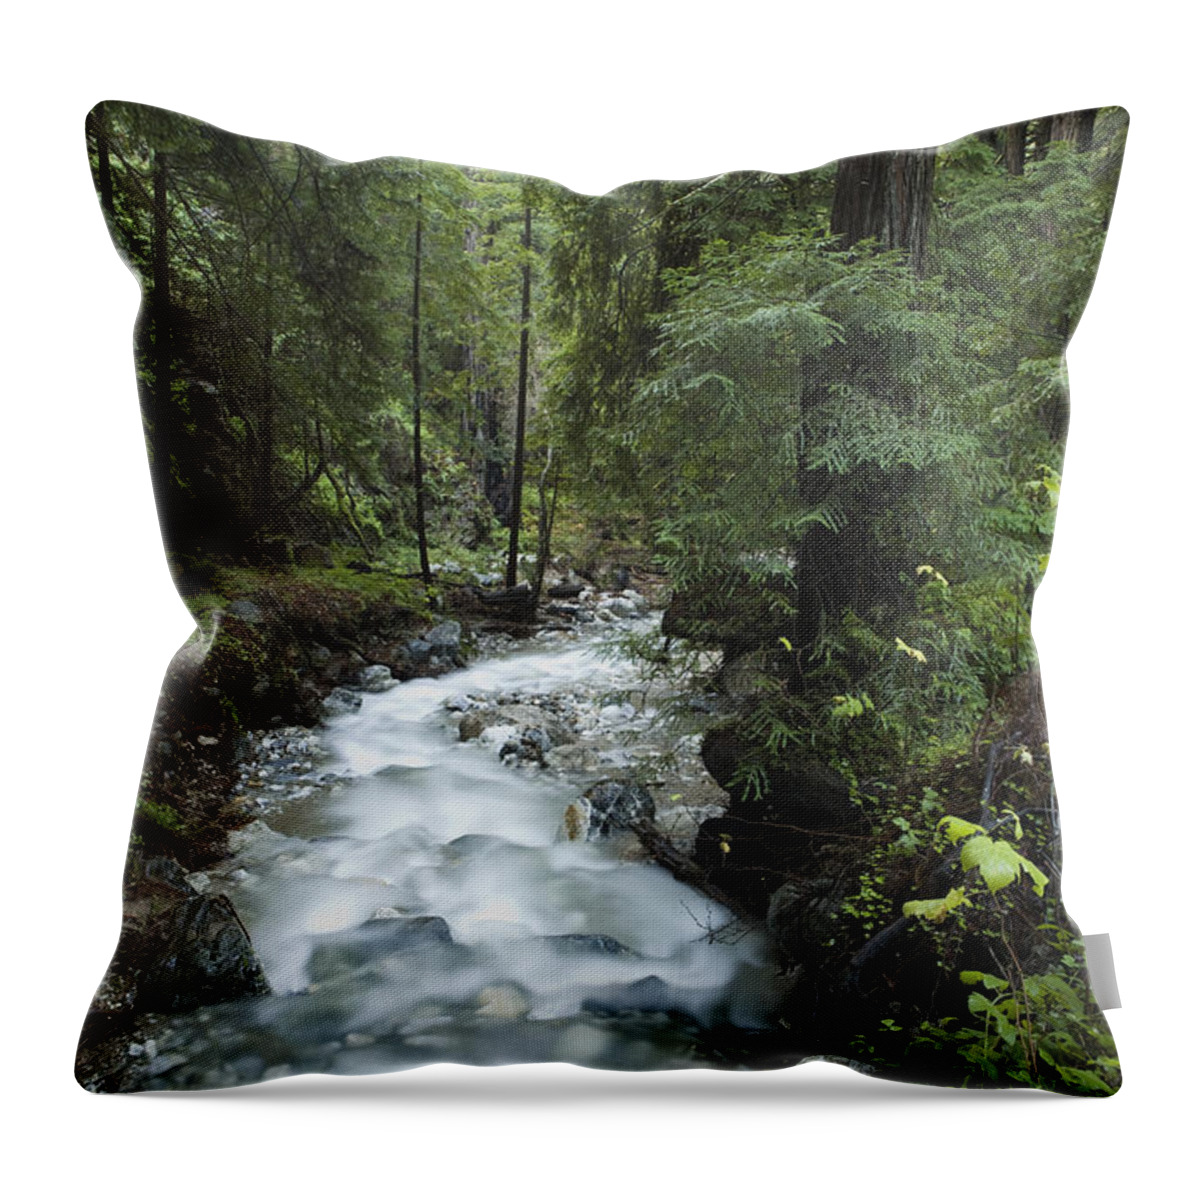 00442988 Throw Pillow featuring the photograph Coast Redwood Forest Big Sur California by Sebastian Kennerknecht